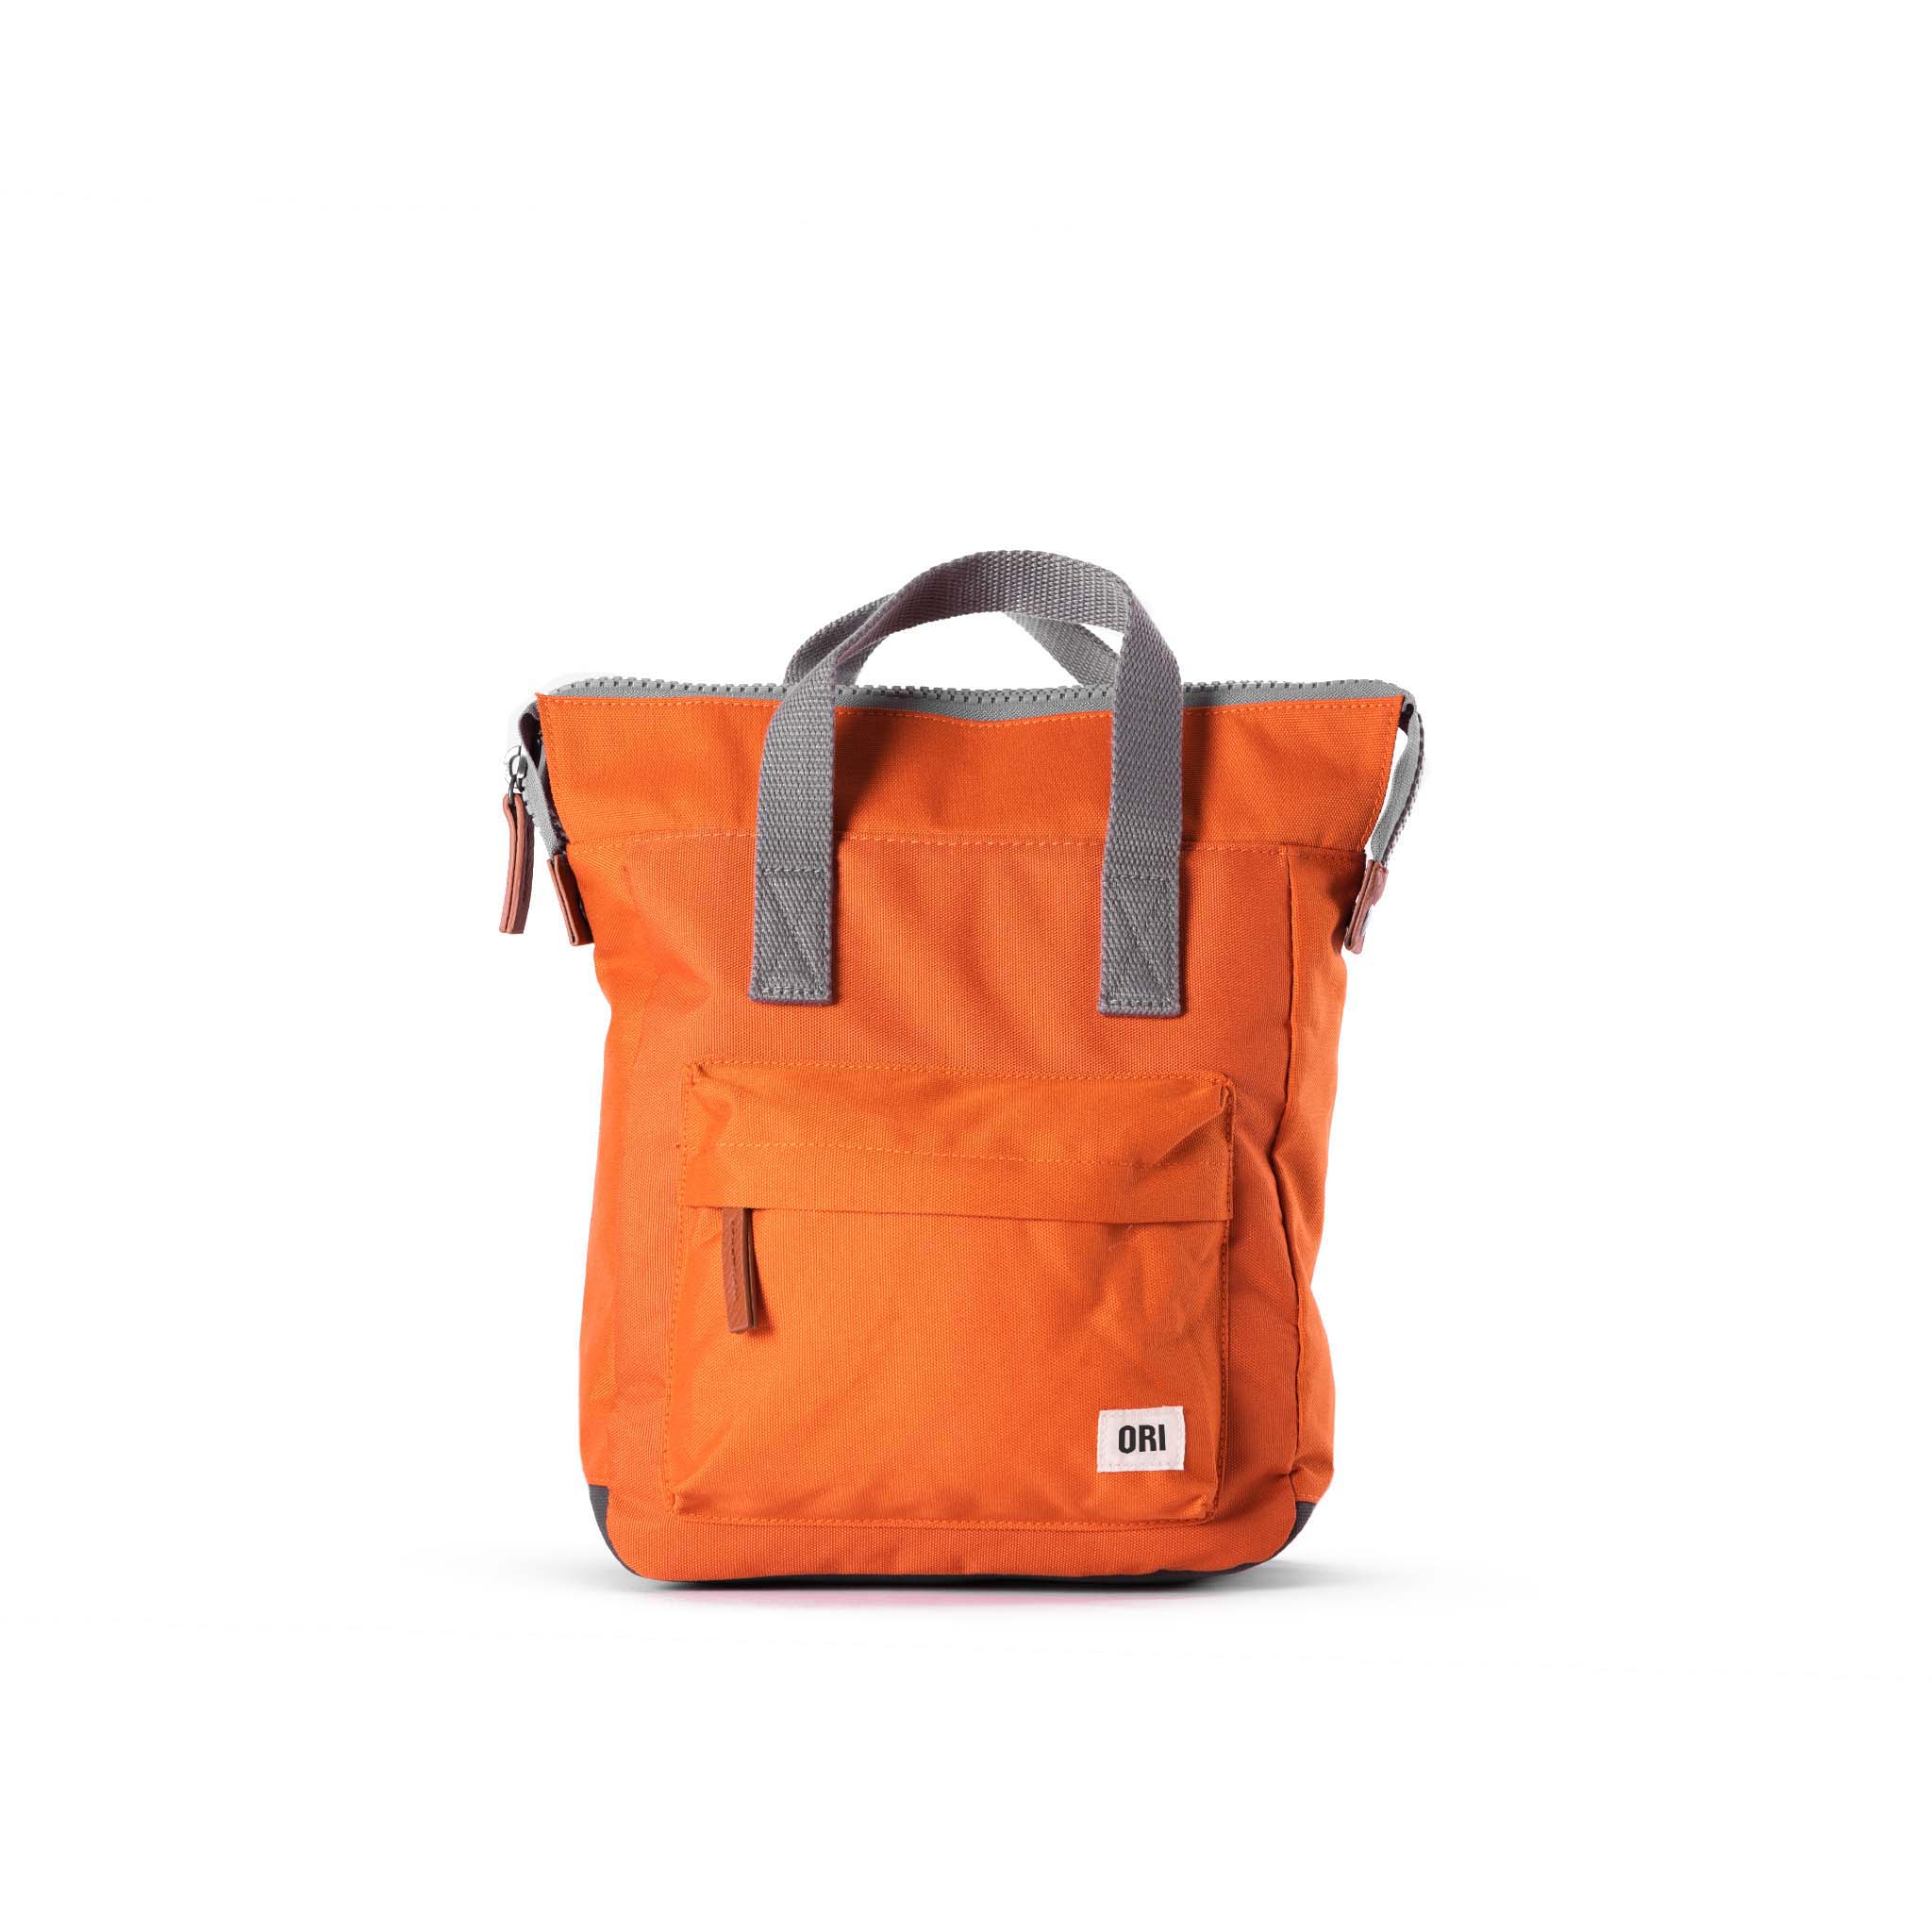 Bella Hadid Was Seen Sporting an Orange Telfar “Bushwick Birkin” Shopping  Bag | Teen Vogue